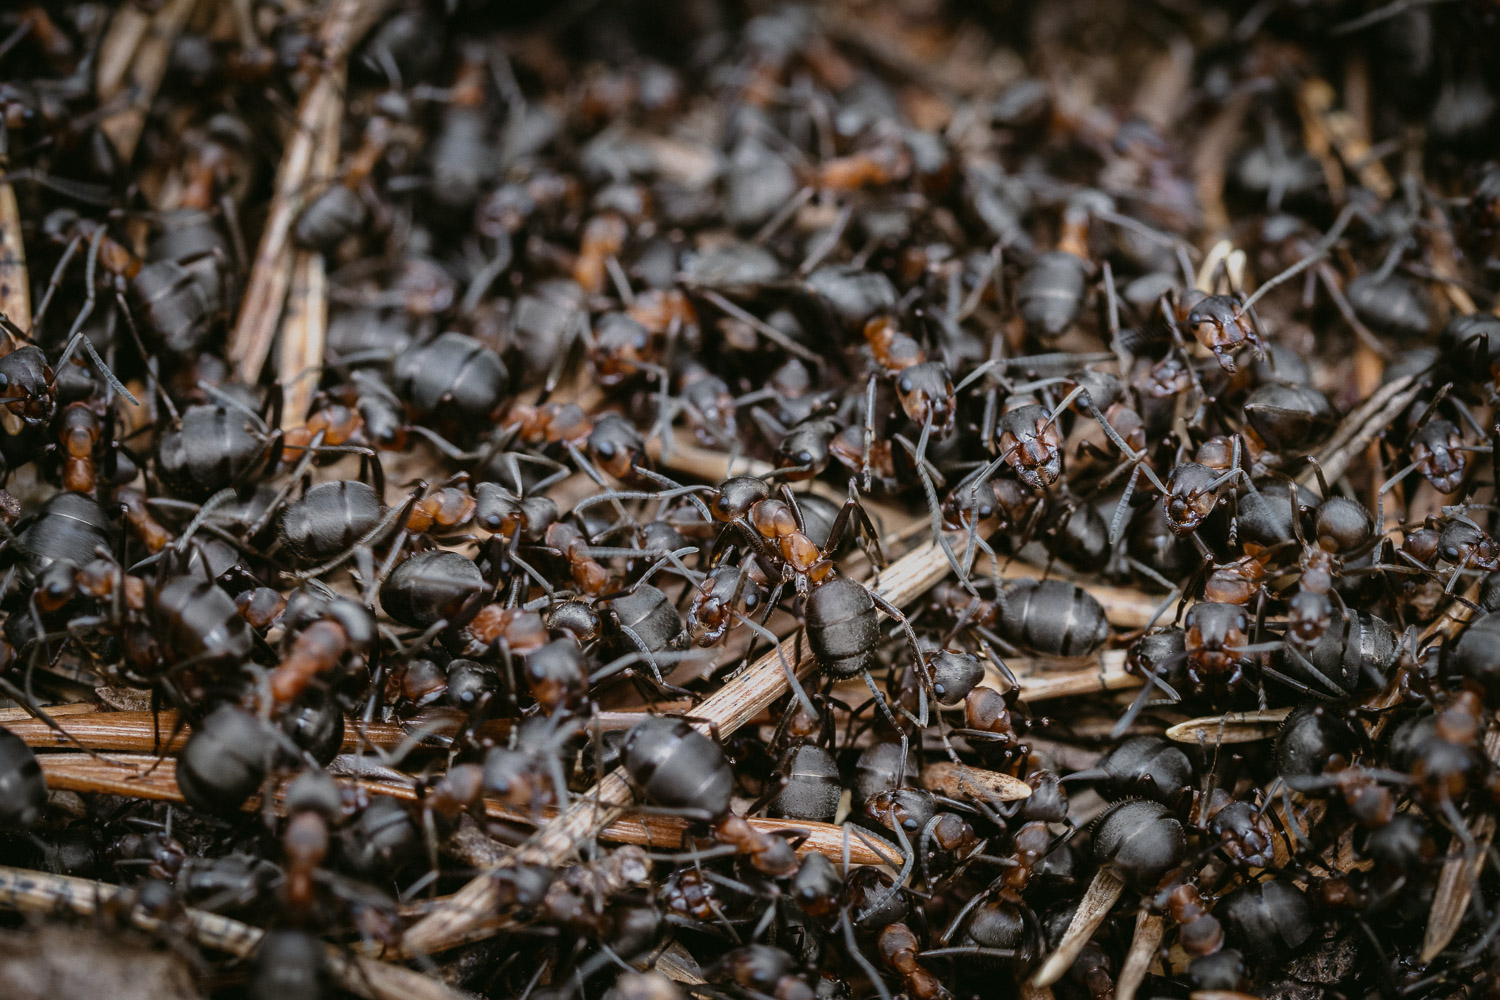 Macro shot of ants